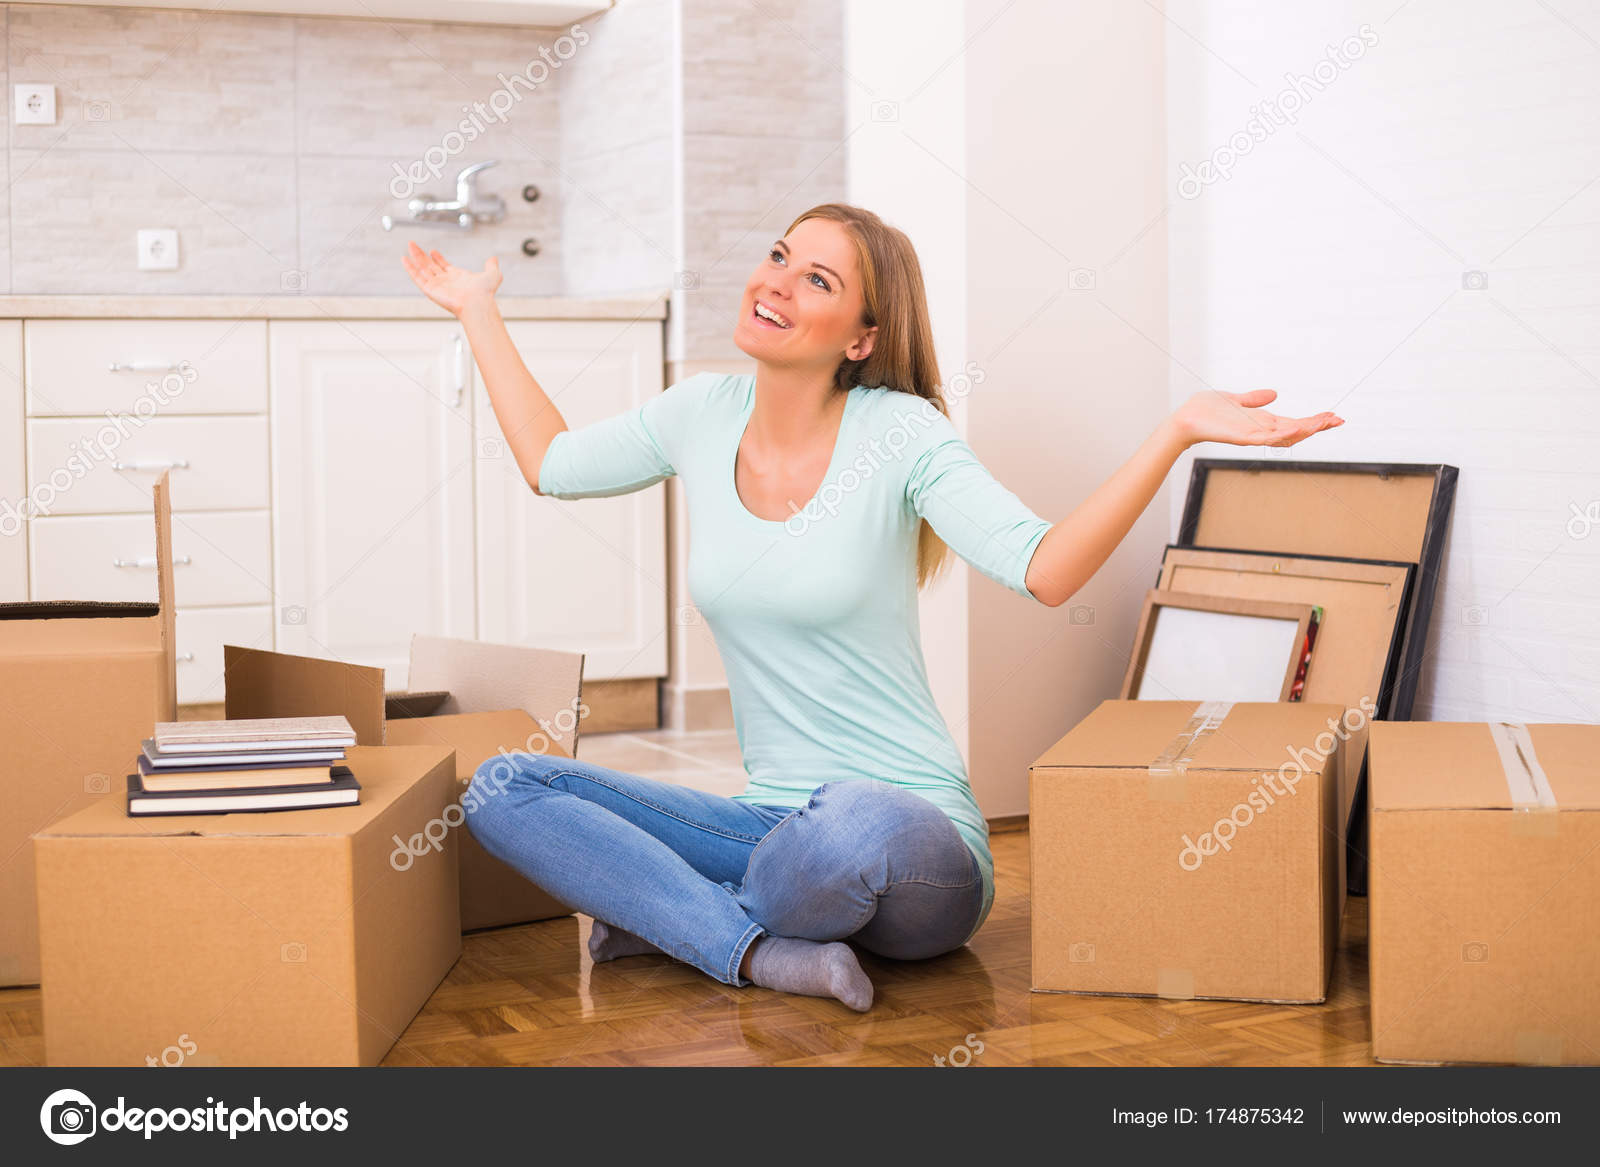 https://st3.depositphotos.com/3078691/17487/i/1600/depositphotos_174875342-stock-photo-happy-woman-moving-new-apartment.jpg